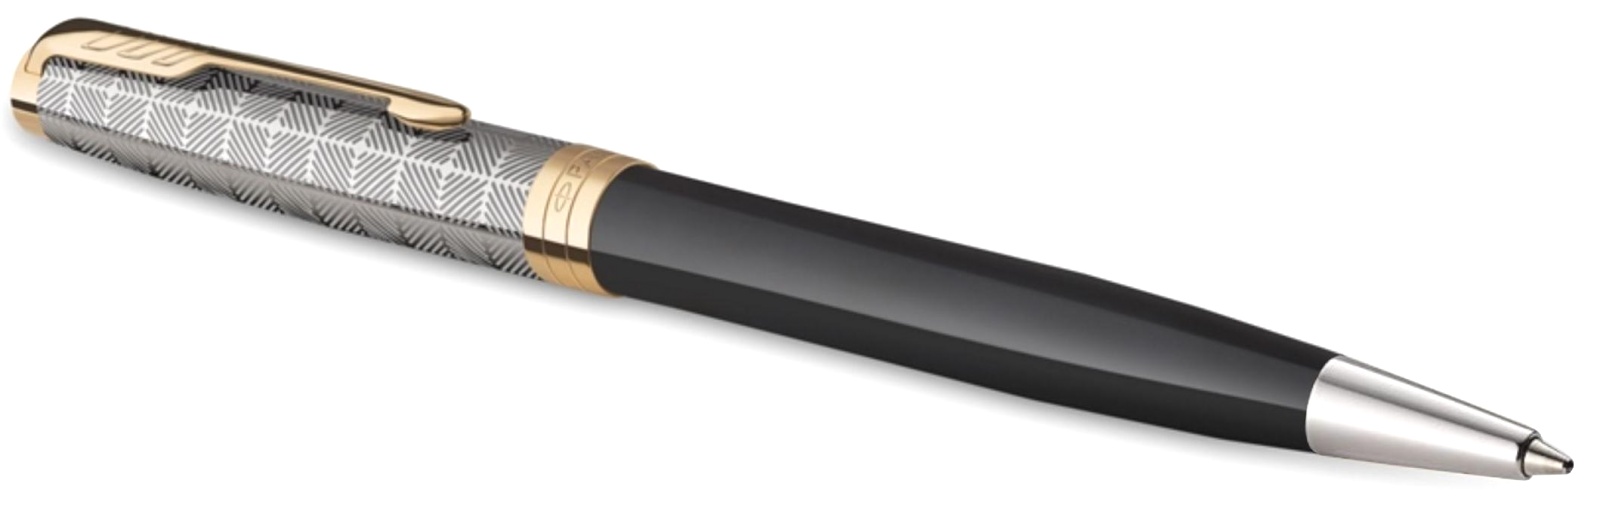  Ручка шариковая Parker Sonnet Premium K537, Metal Black GT, фото 2